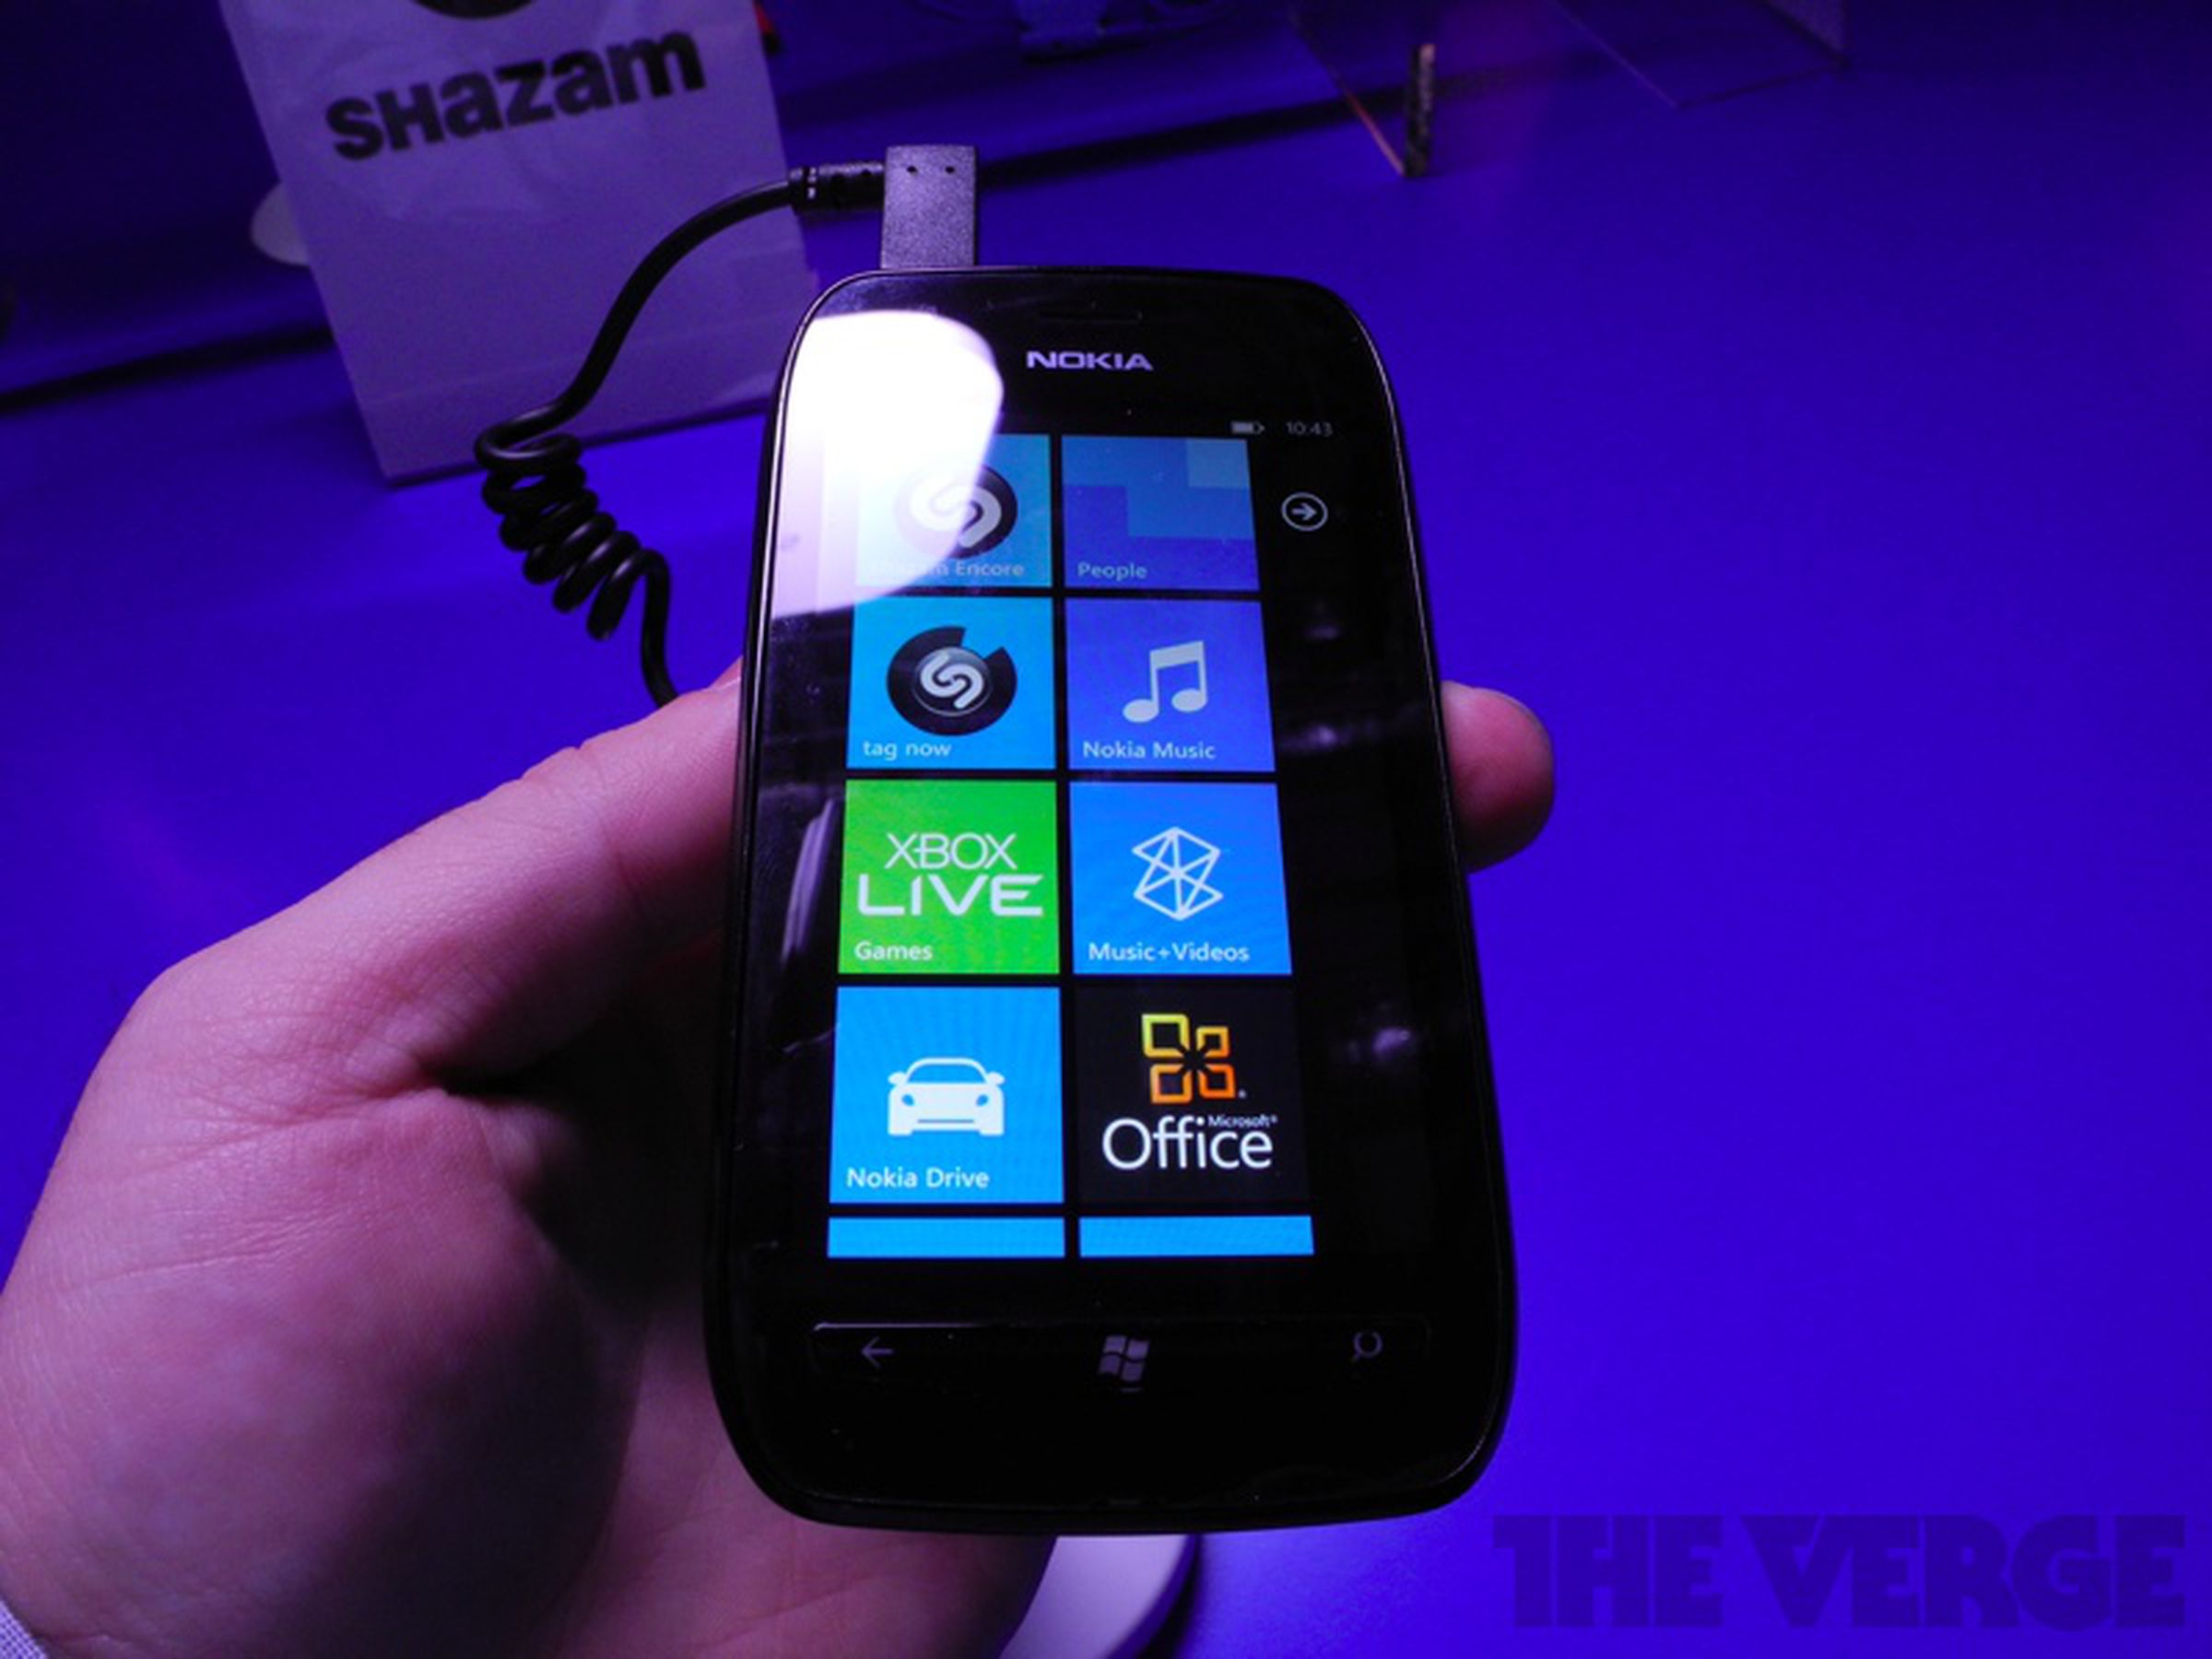 Nokia Lumia 710 Windows Phone Hands on Photos